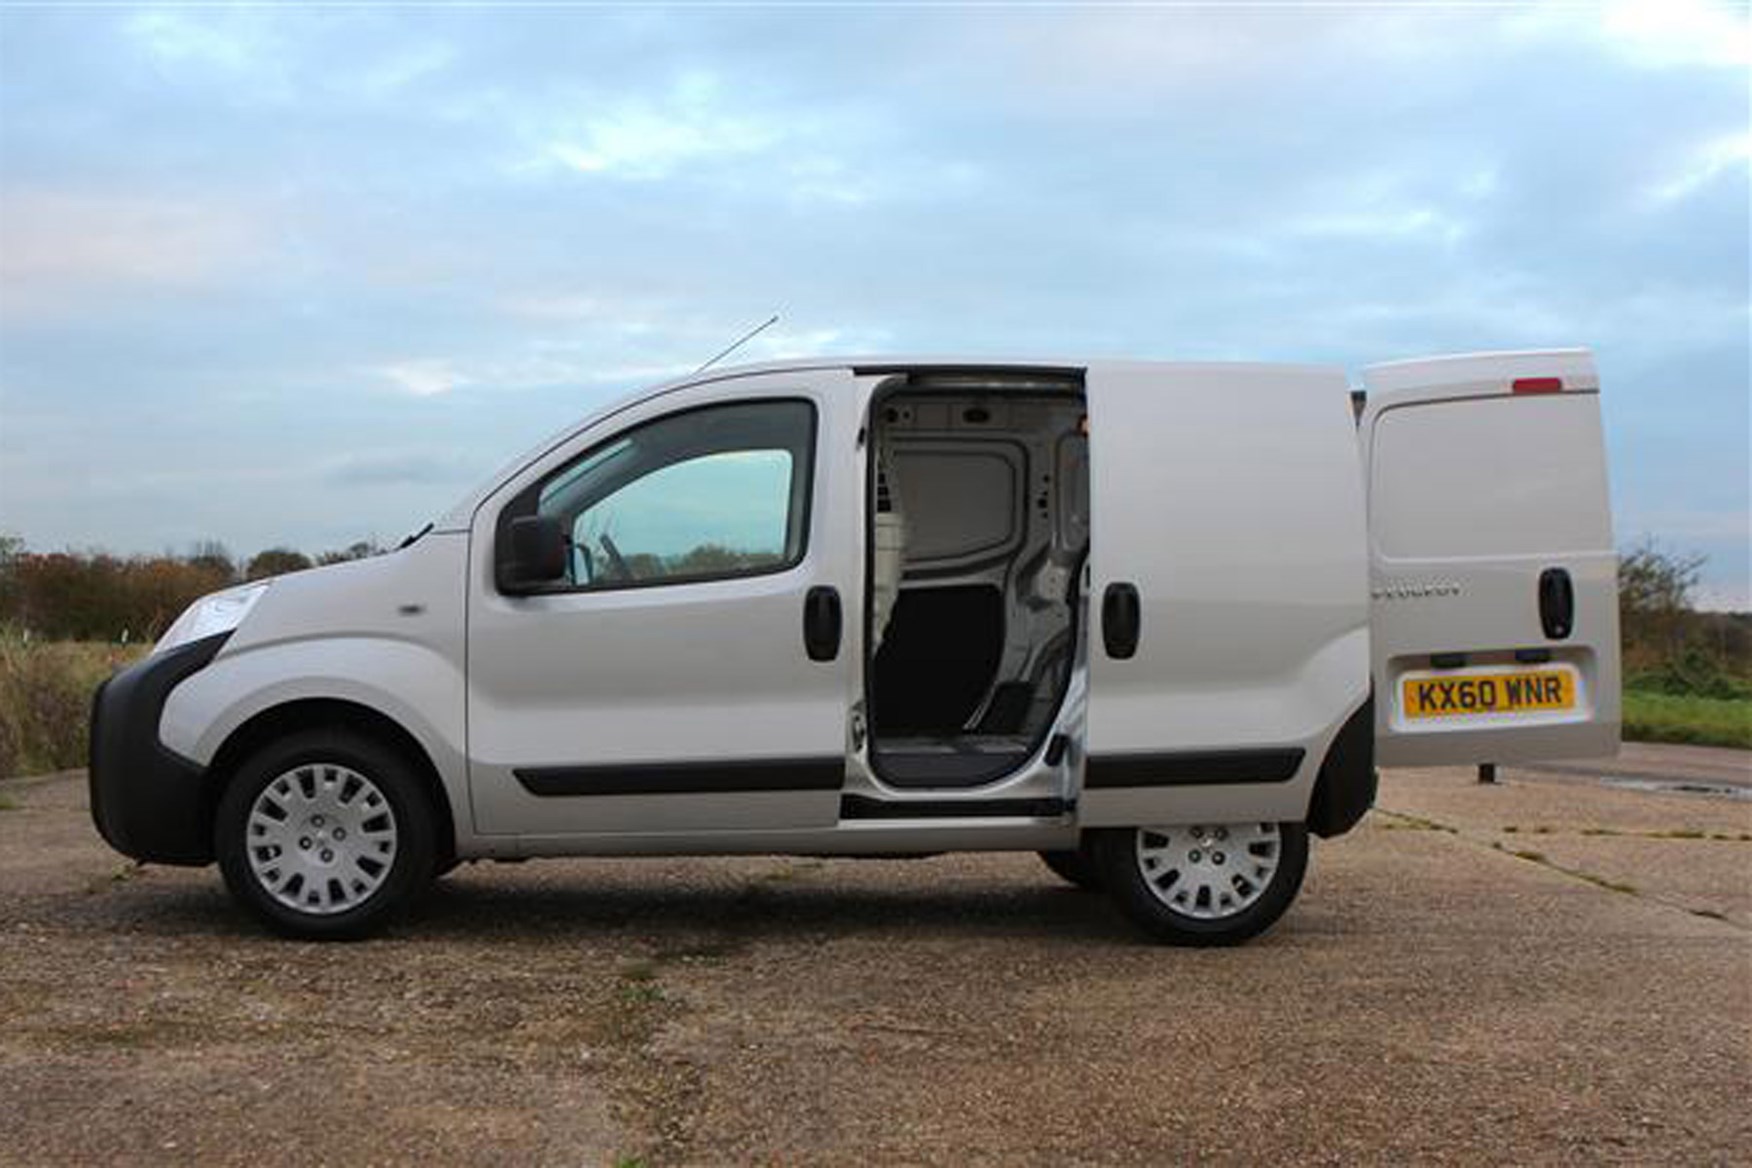 Peugeot Bipper review on Parkers Vans - load area access